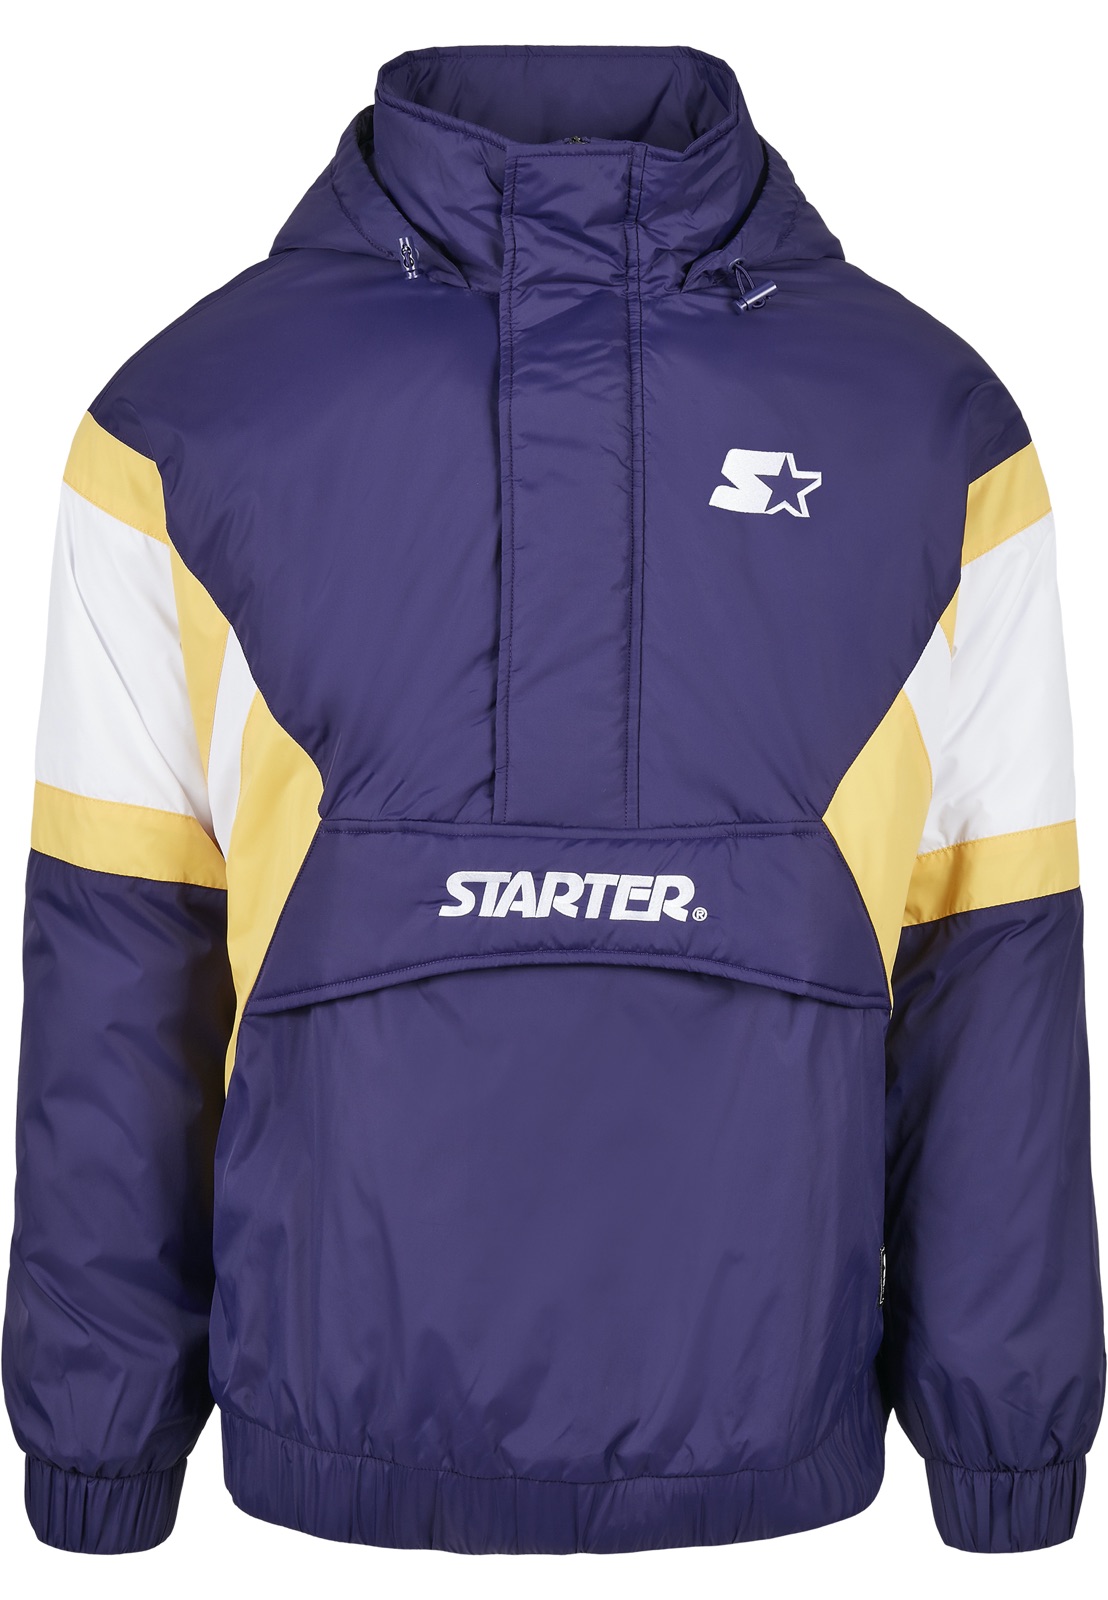 Starter Purple/Wht/Buff Yellow